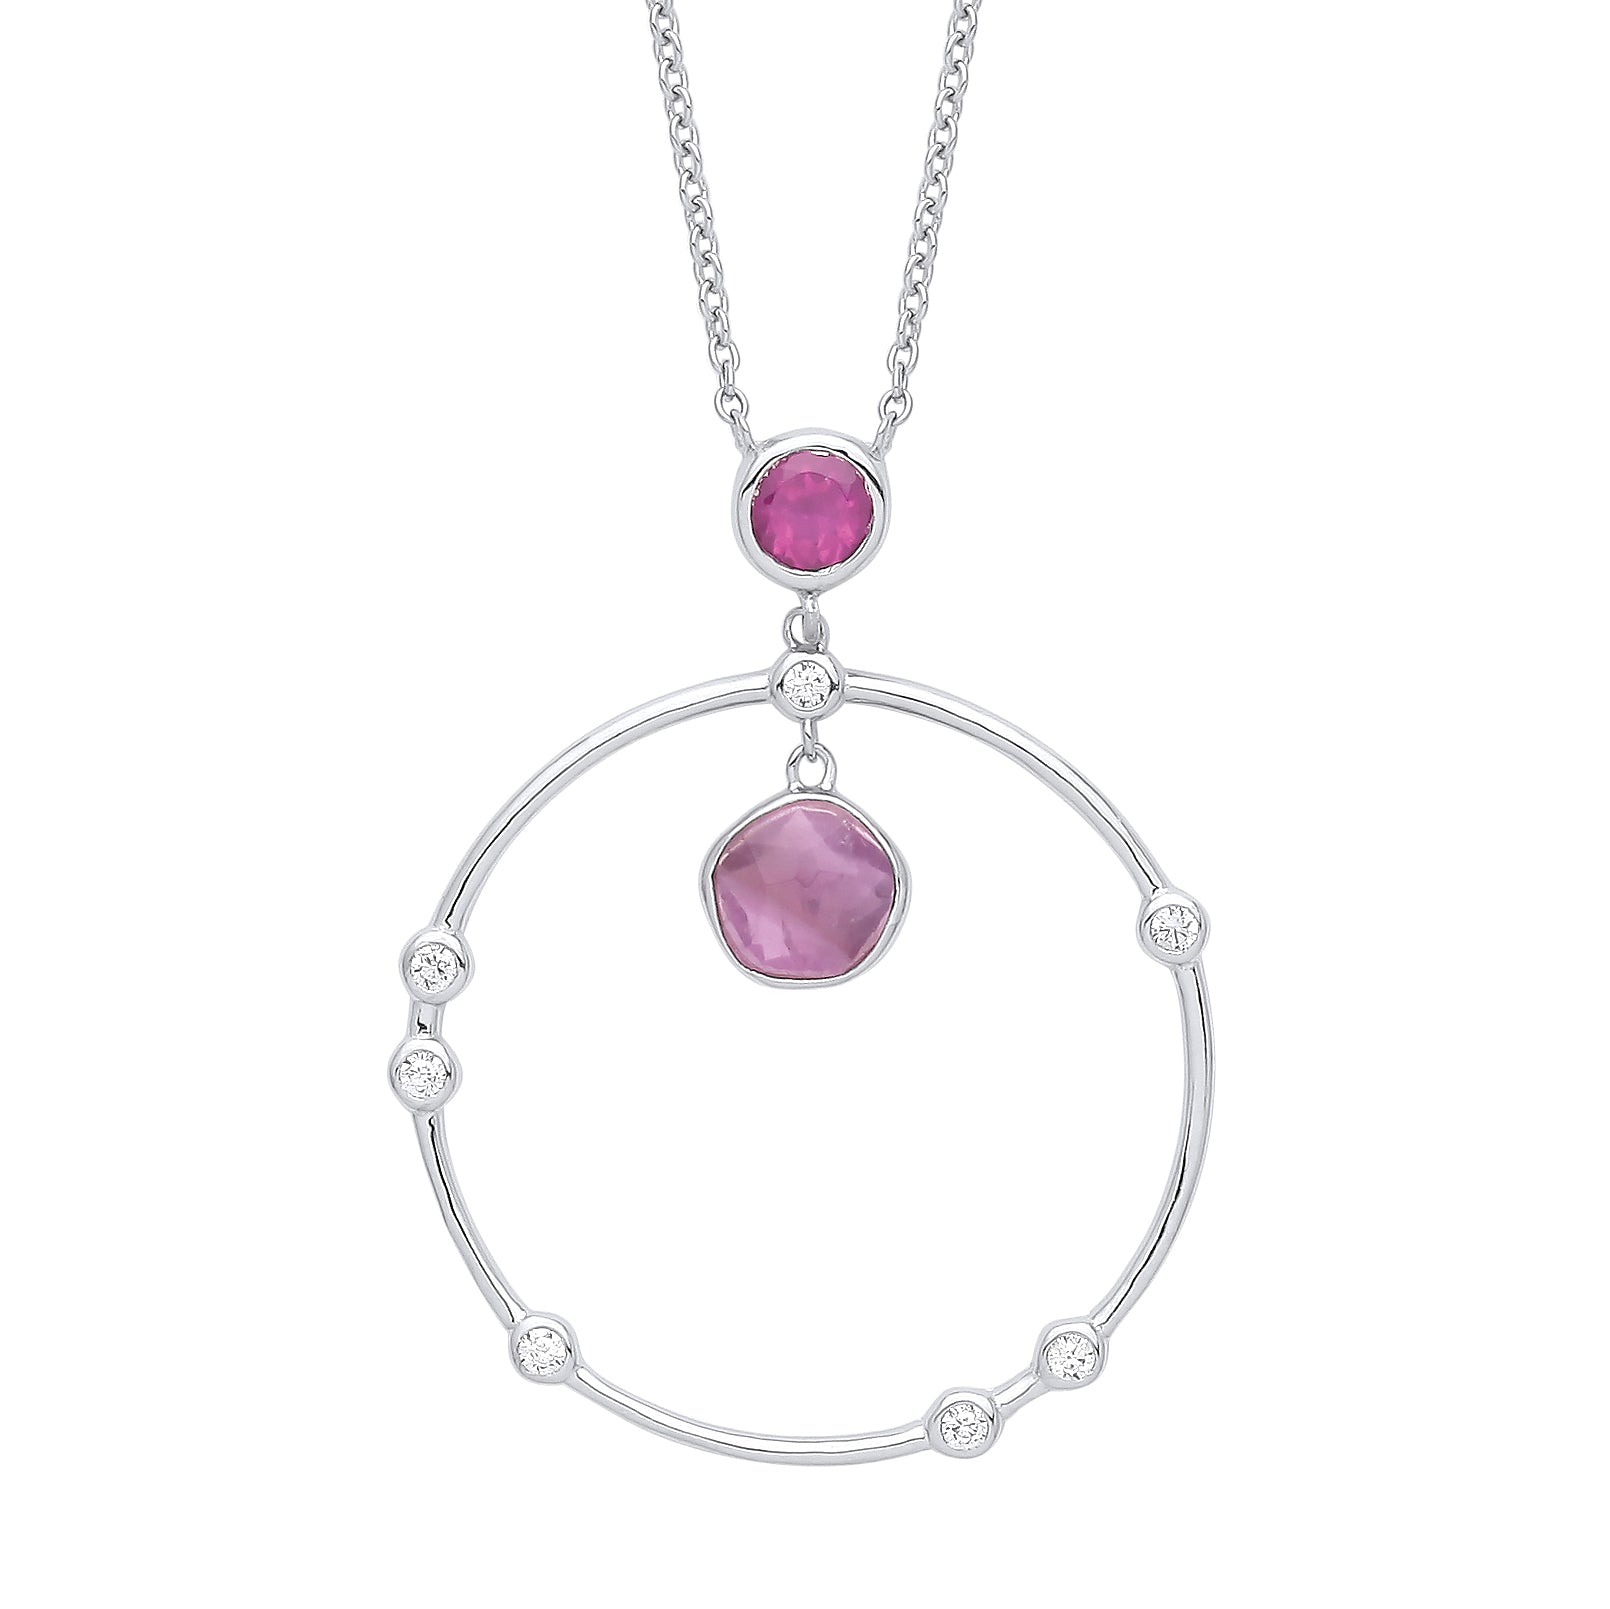 Silver  Pendulum Swing Orbit Circle Lavalier Necklace - GVK343